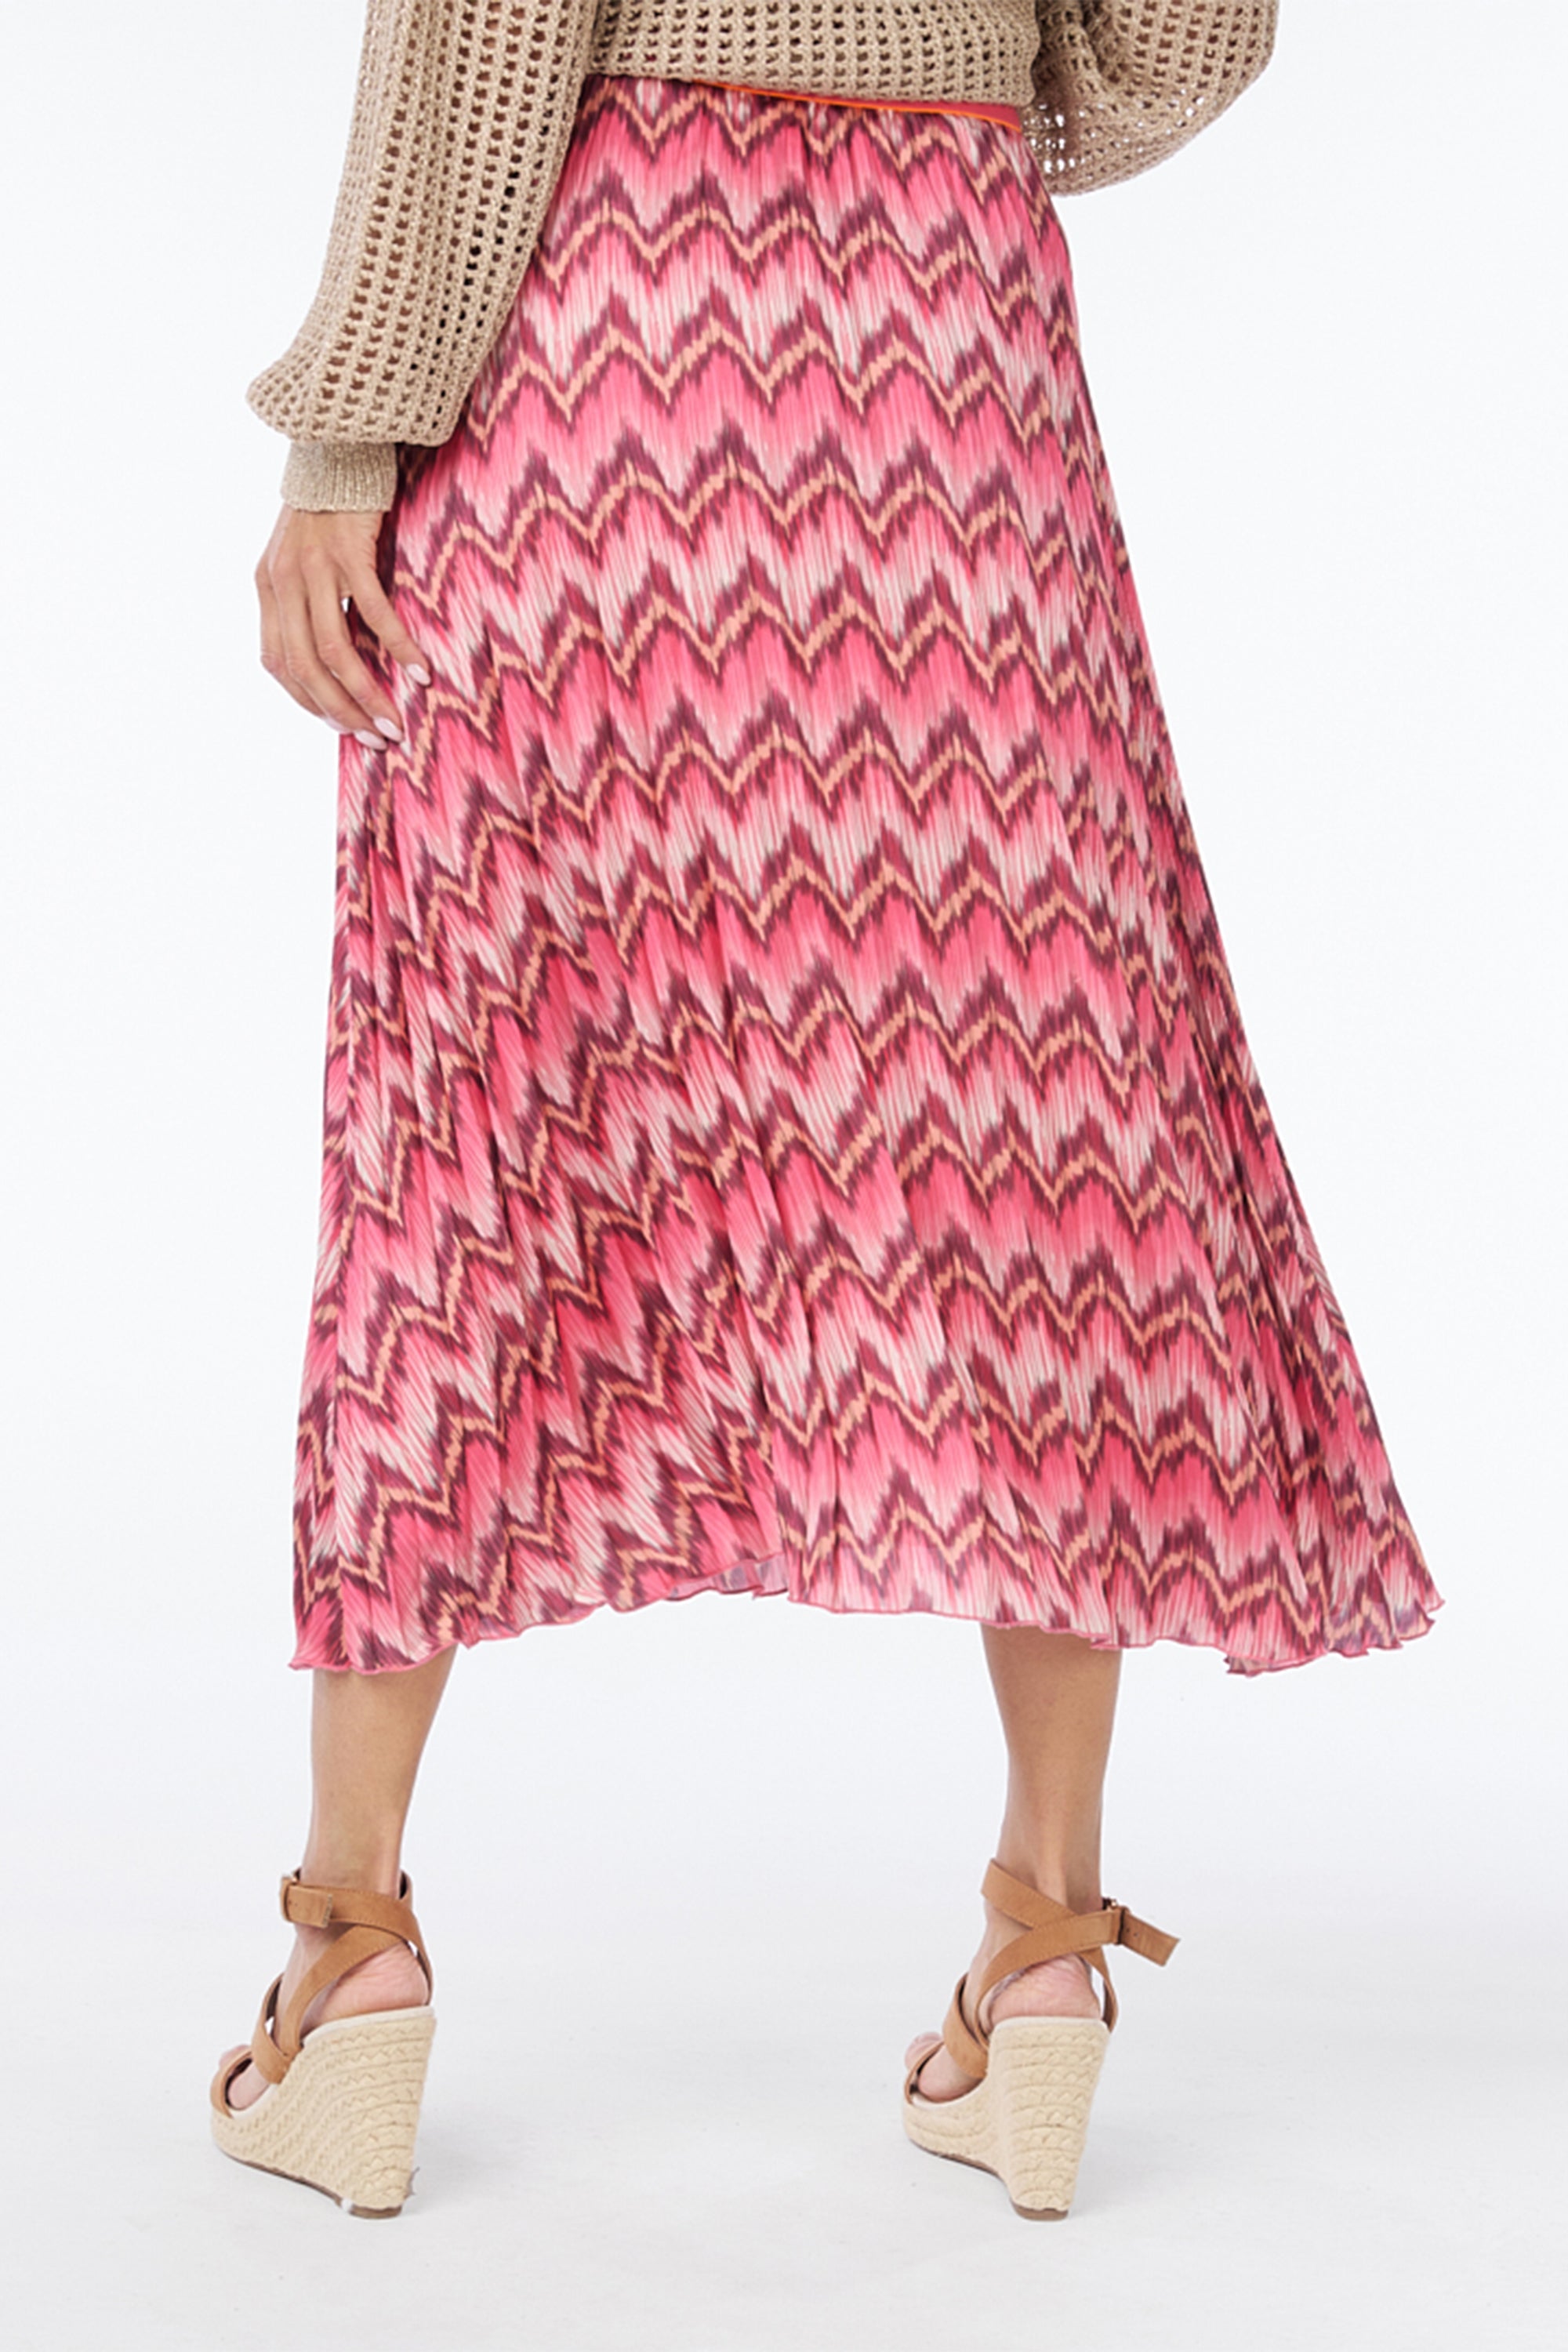 Back view of Esqualo (SP2414006) Pink ZigZag Stripe Print, Pleated Midi Skirt